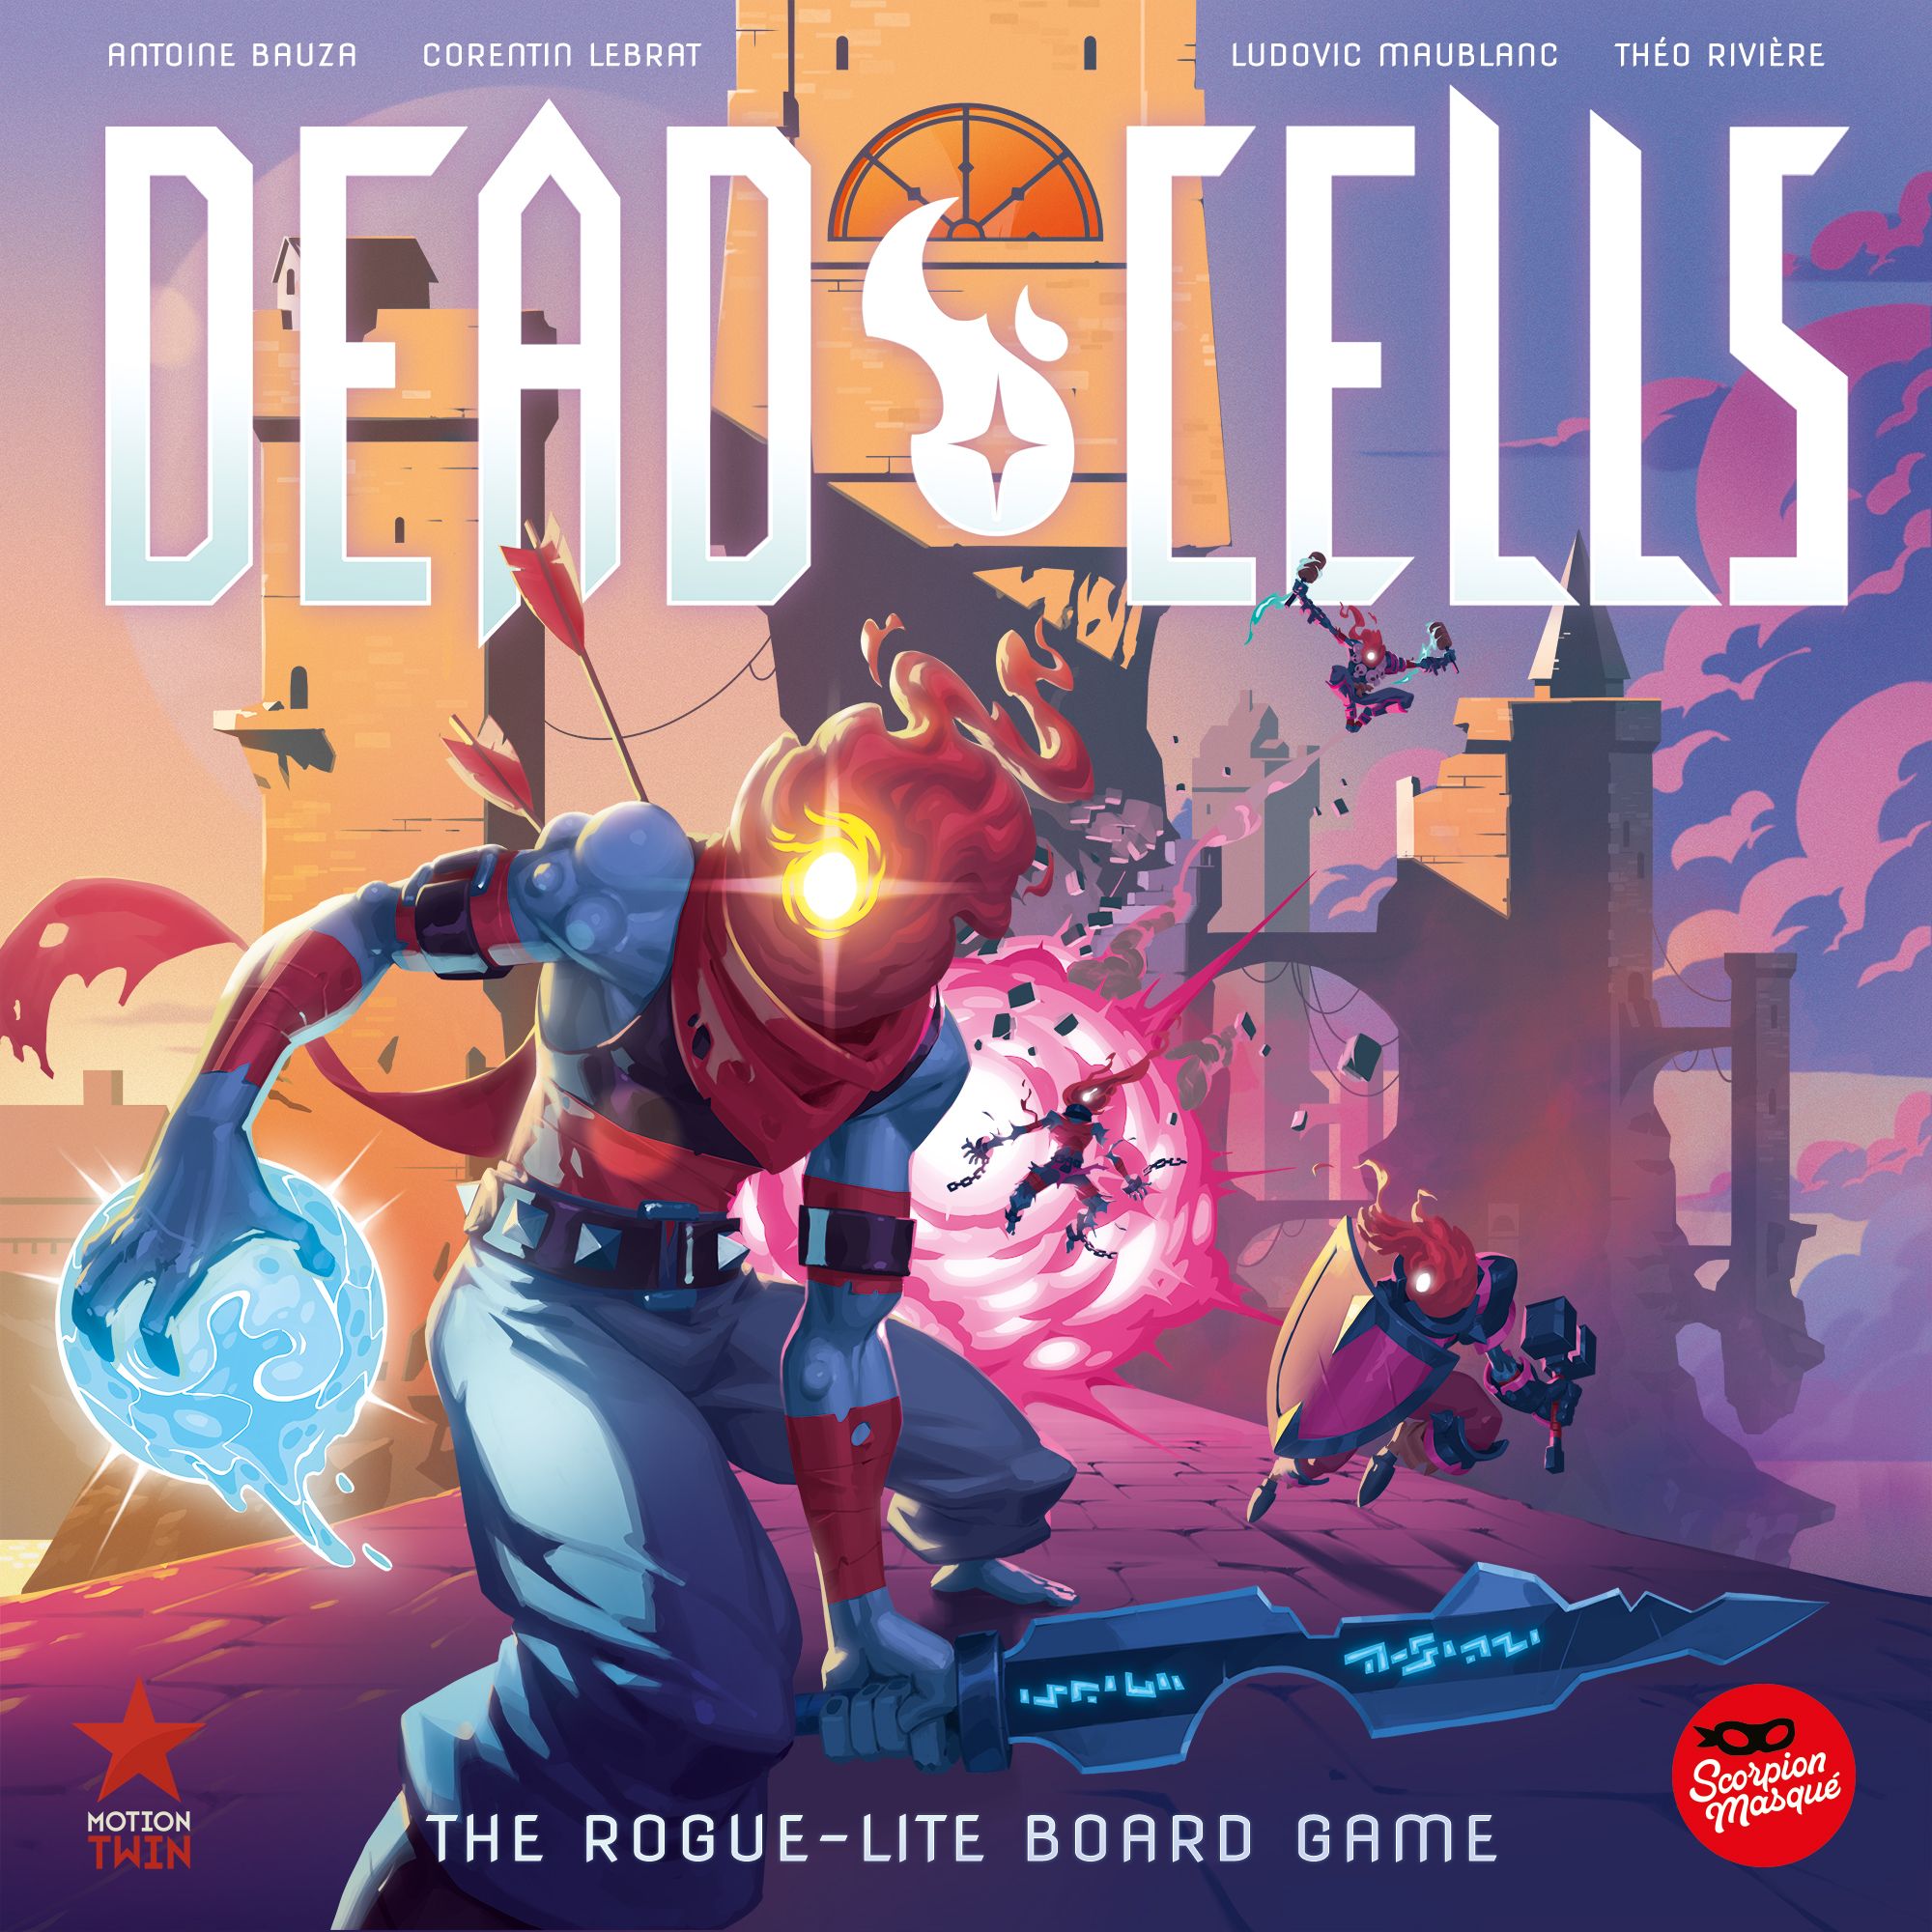 Dead Cells The Rogue-Lite Board Game - Scorpion Masque